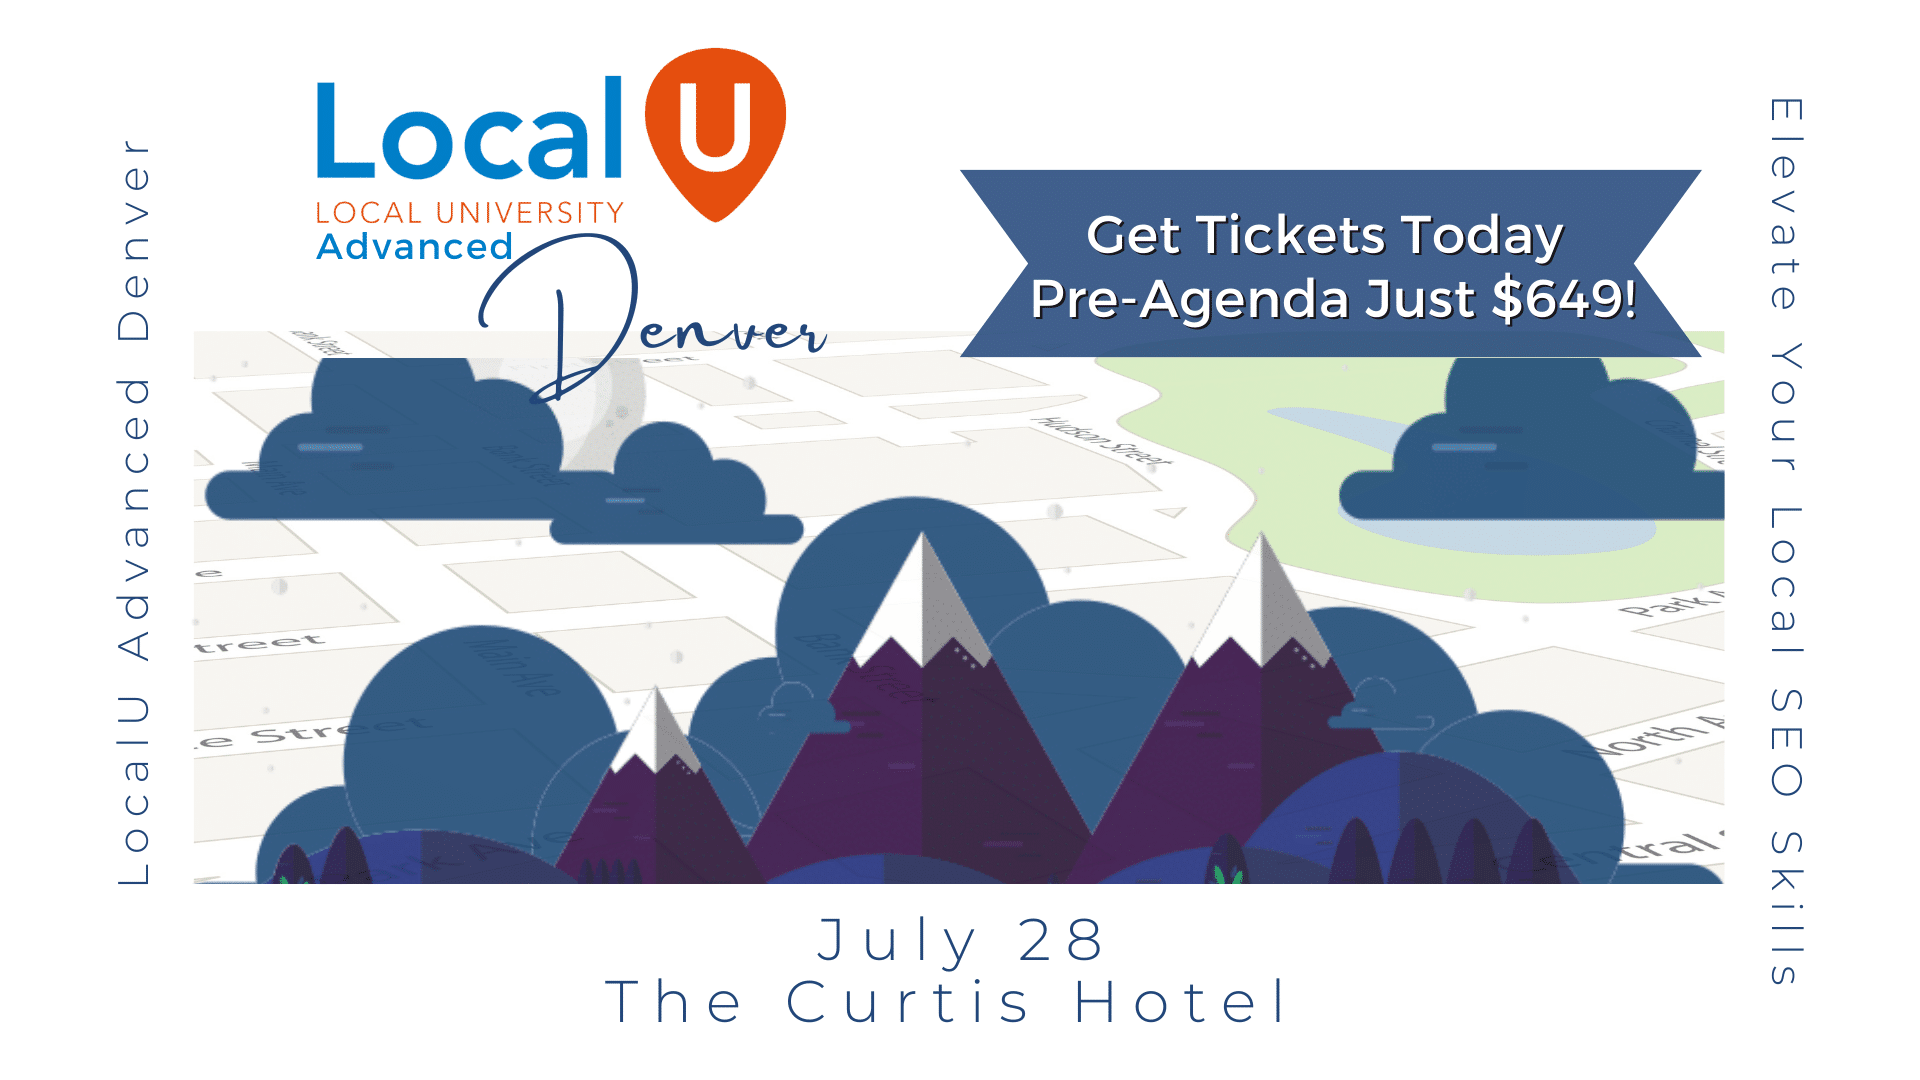 LocalU Advanced Denver – A Full Day Workshop for Internet Marketing Professionals